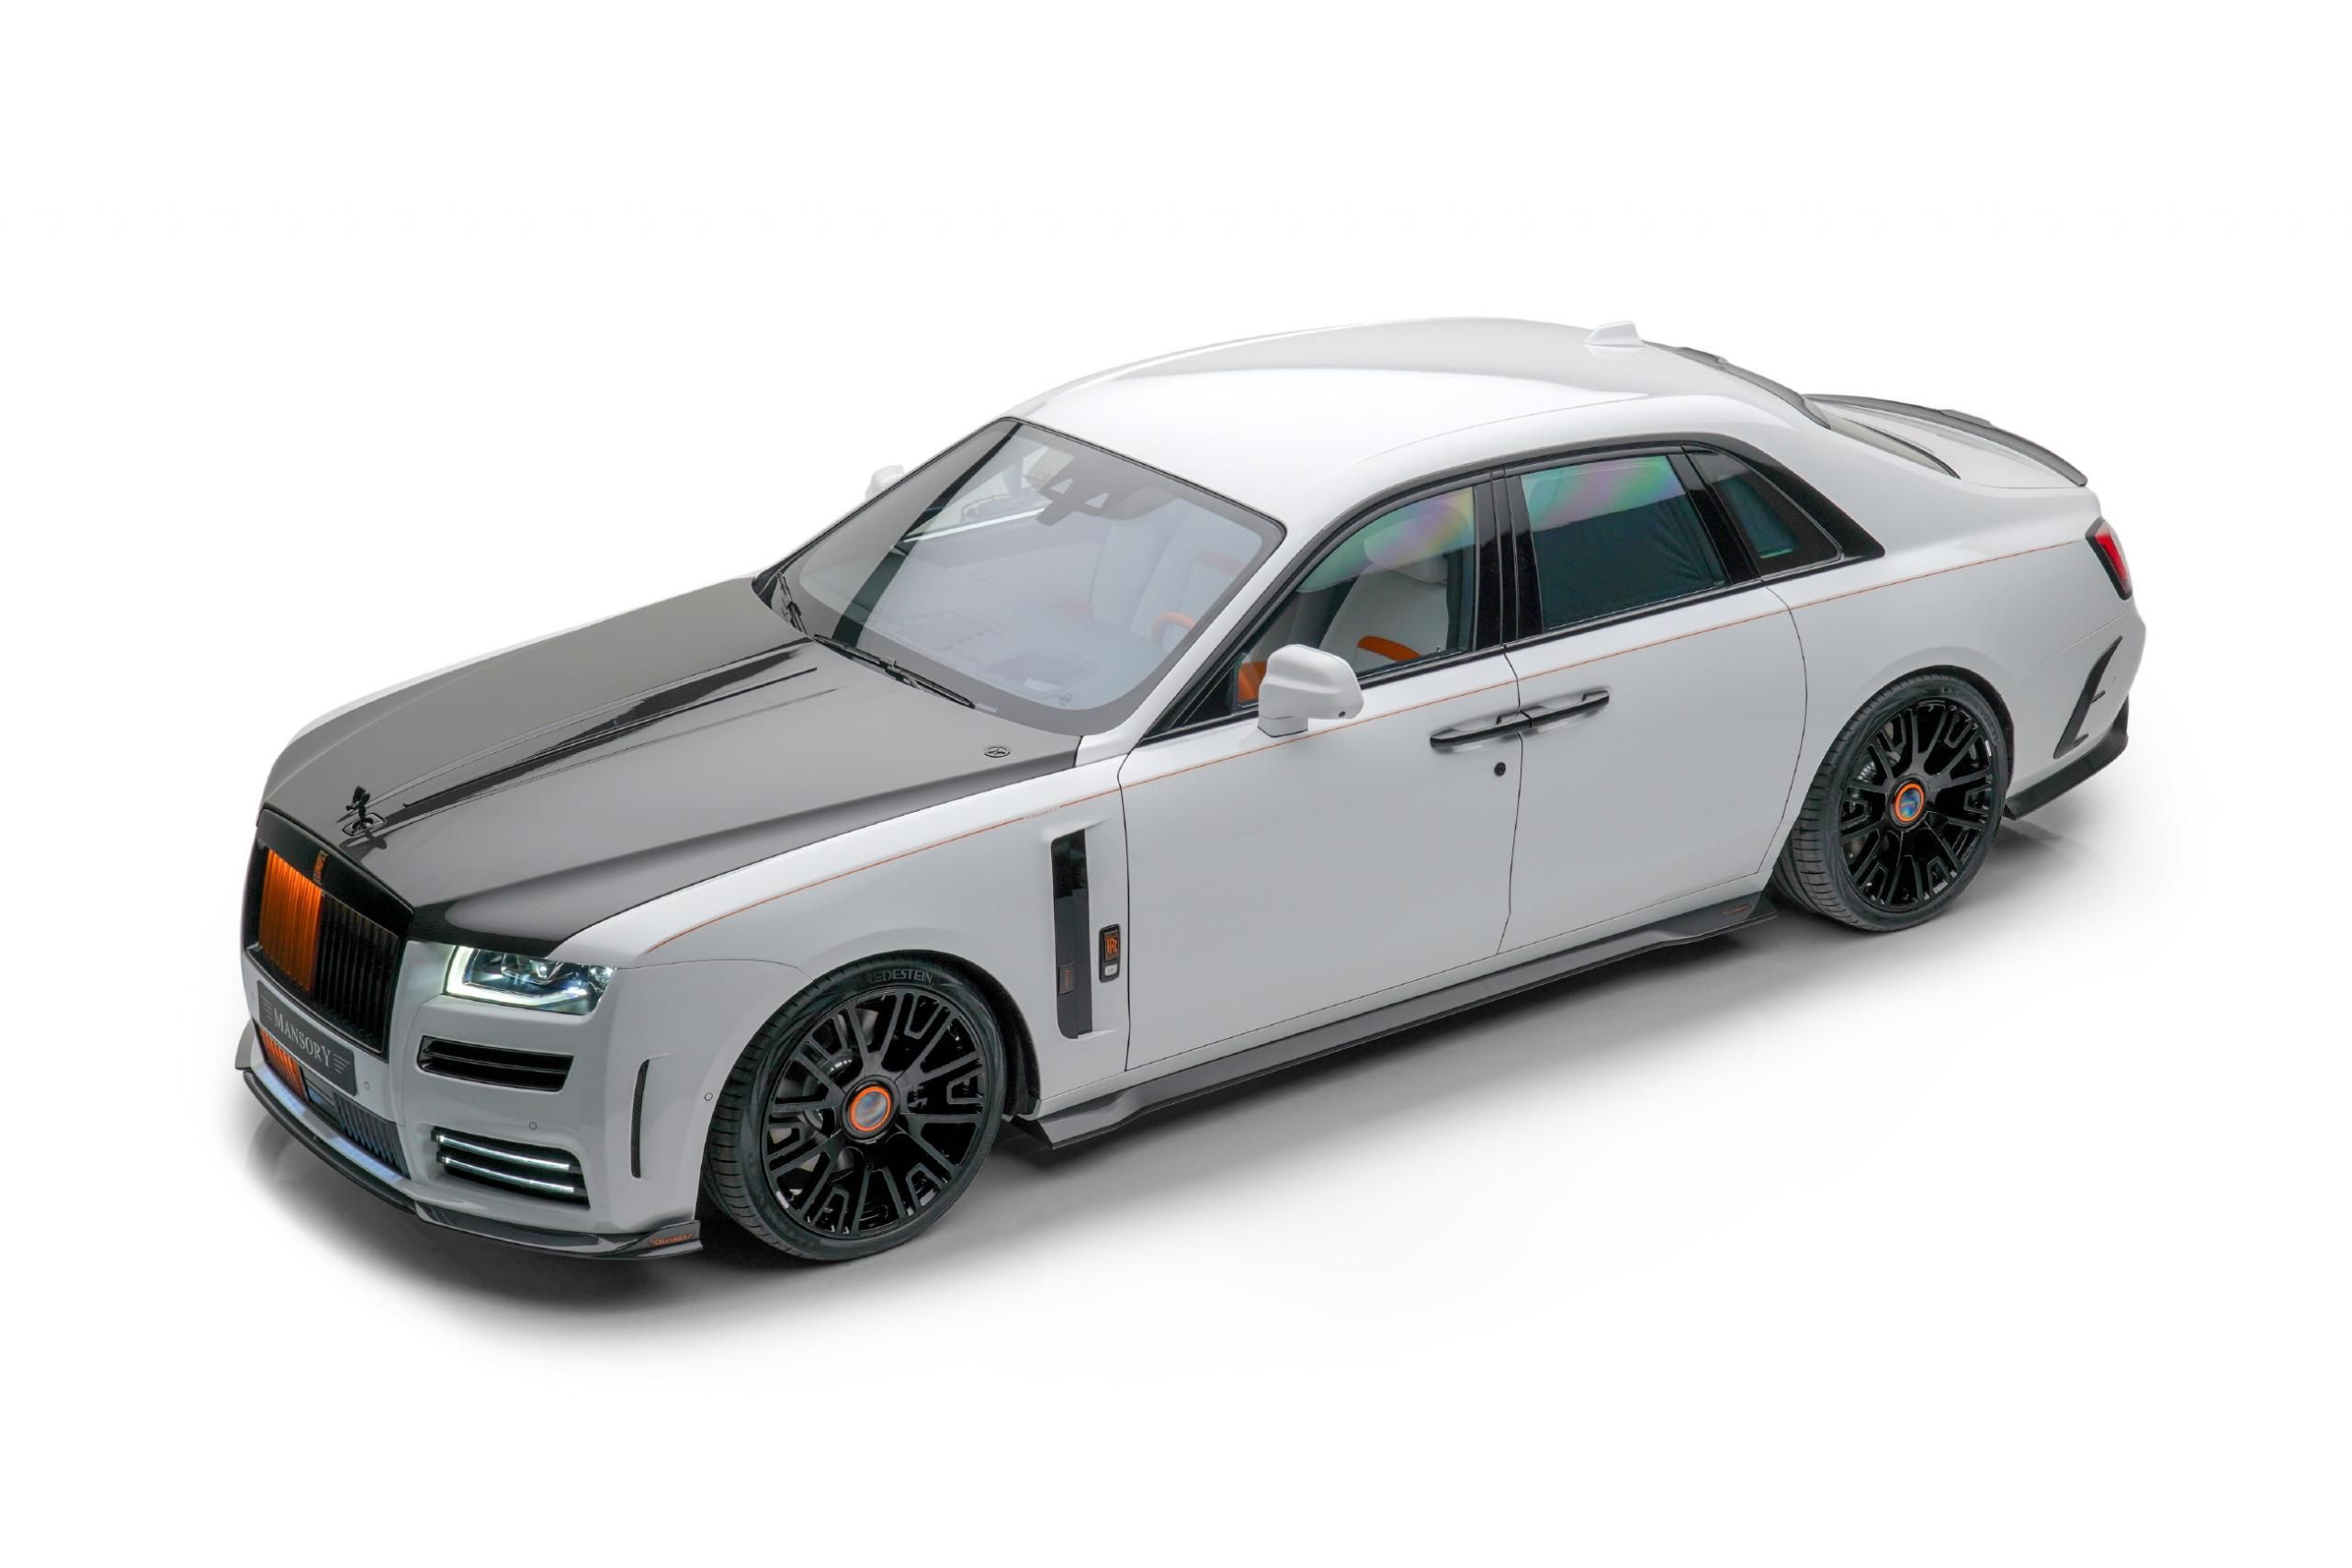 2021 Rolls Royce Ghost V-12 by Mansory